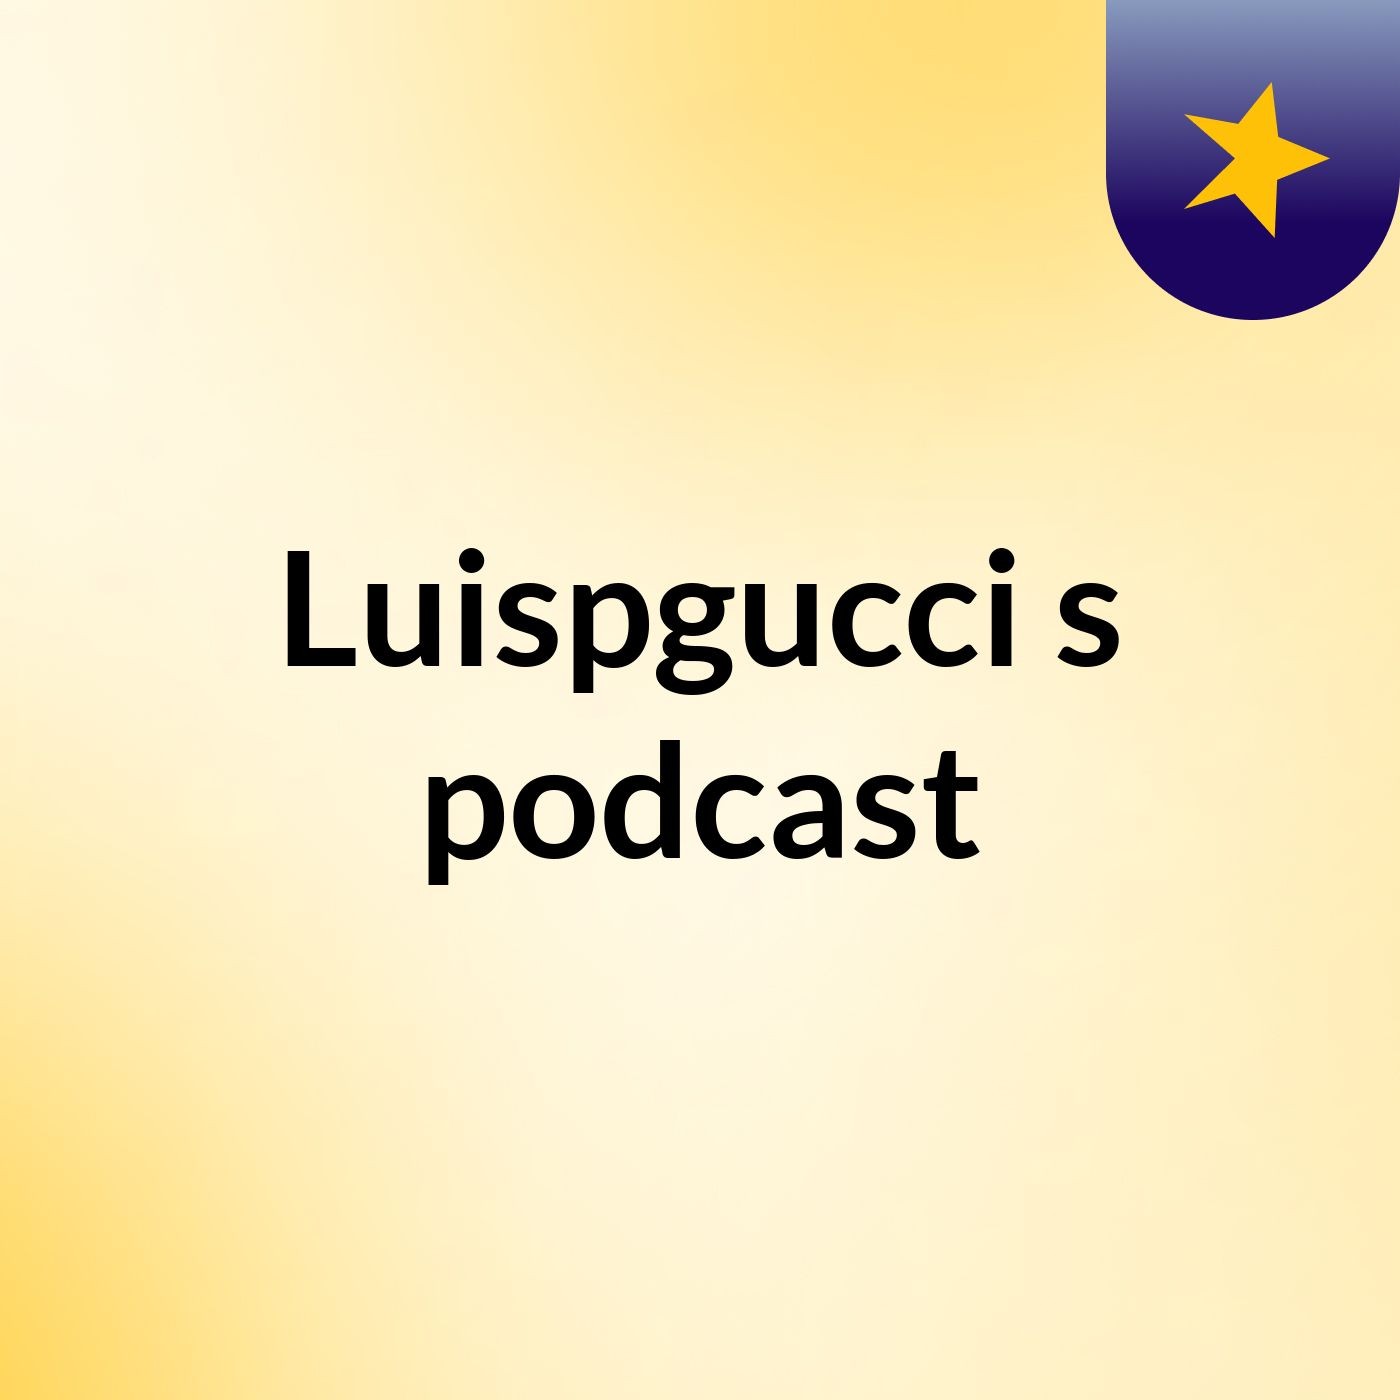 Luispgucci's podcast